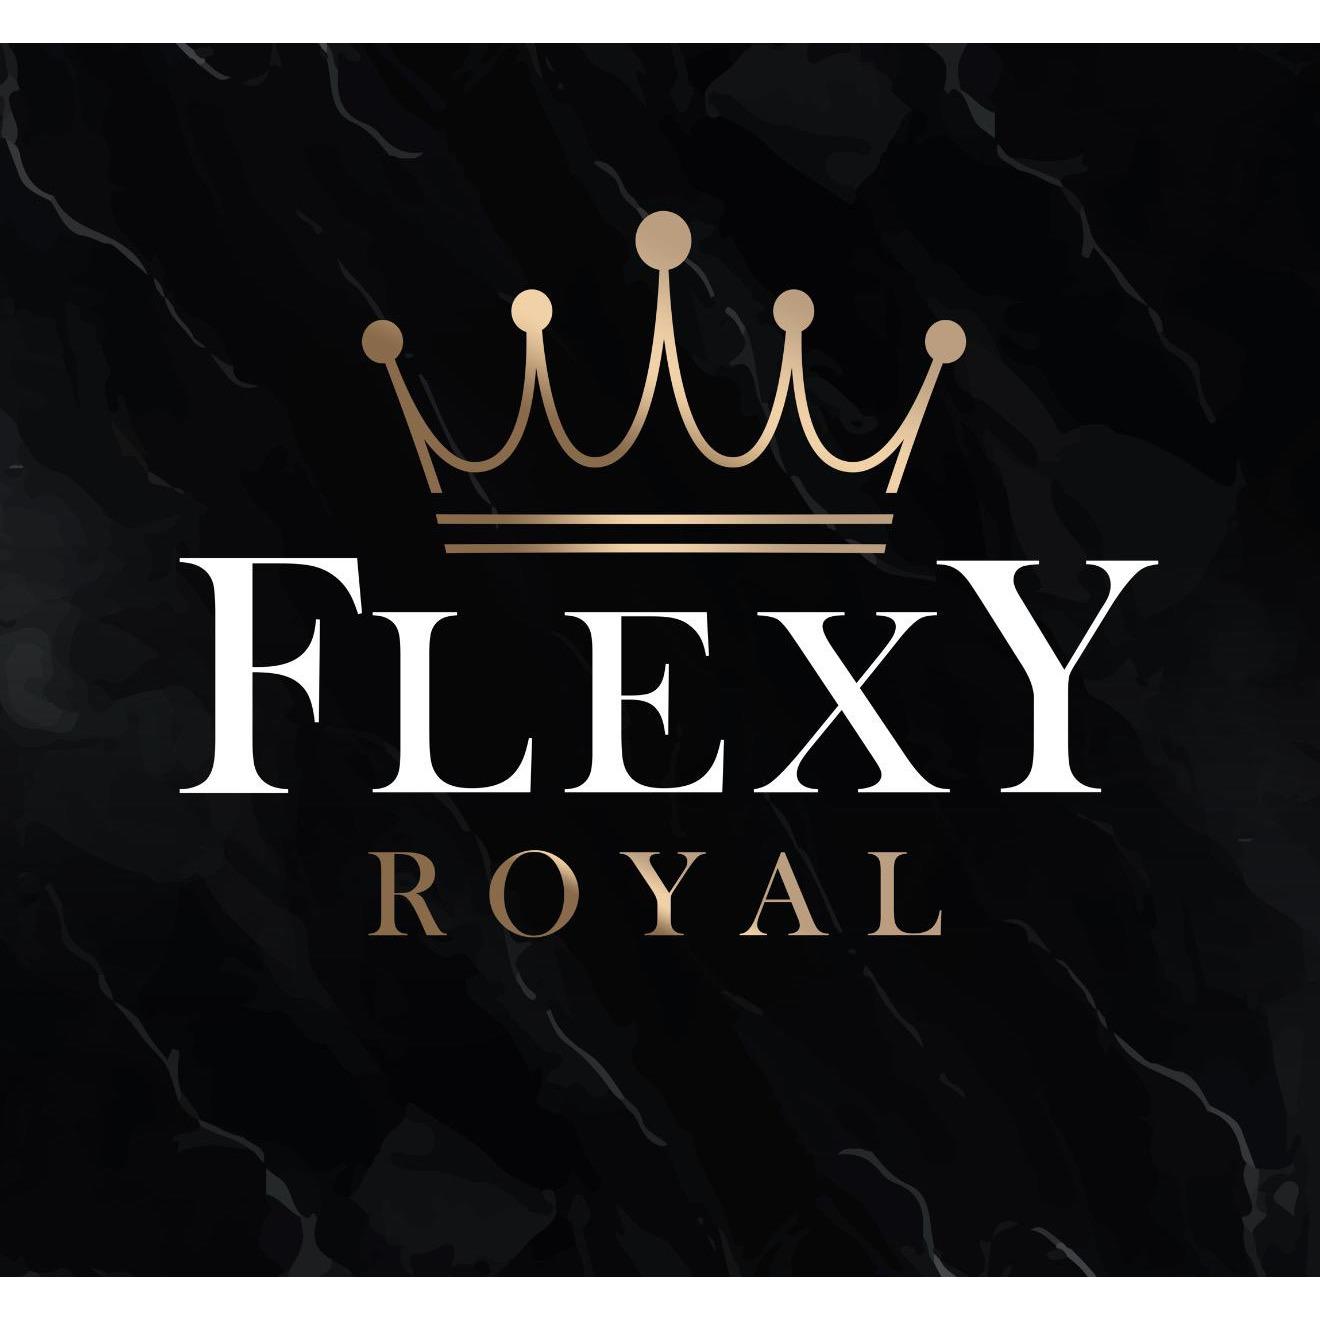 FLEXY ROYAL - Interior Designer - Chynorany - 0950 346 036 Slovakia | ShowMeLocal.com